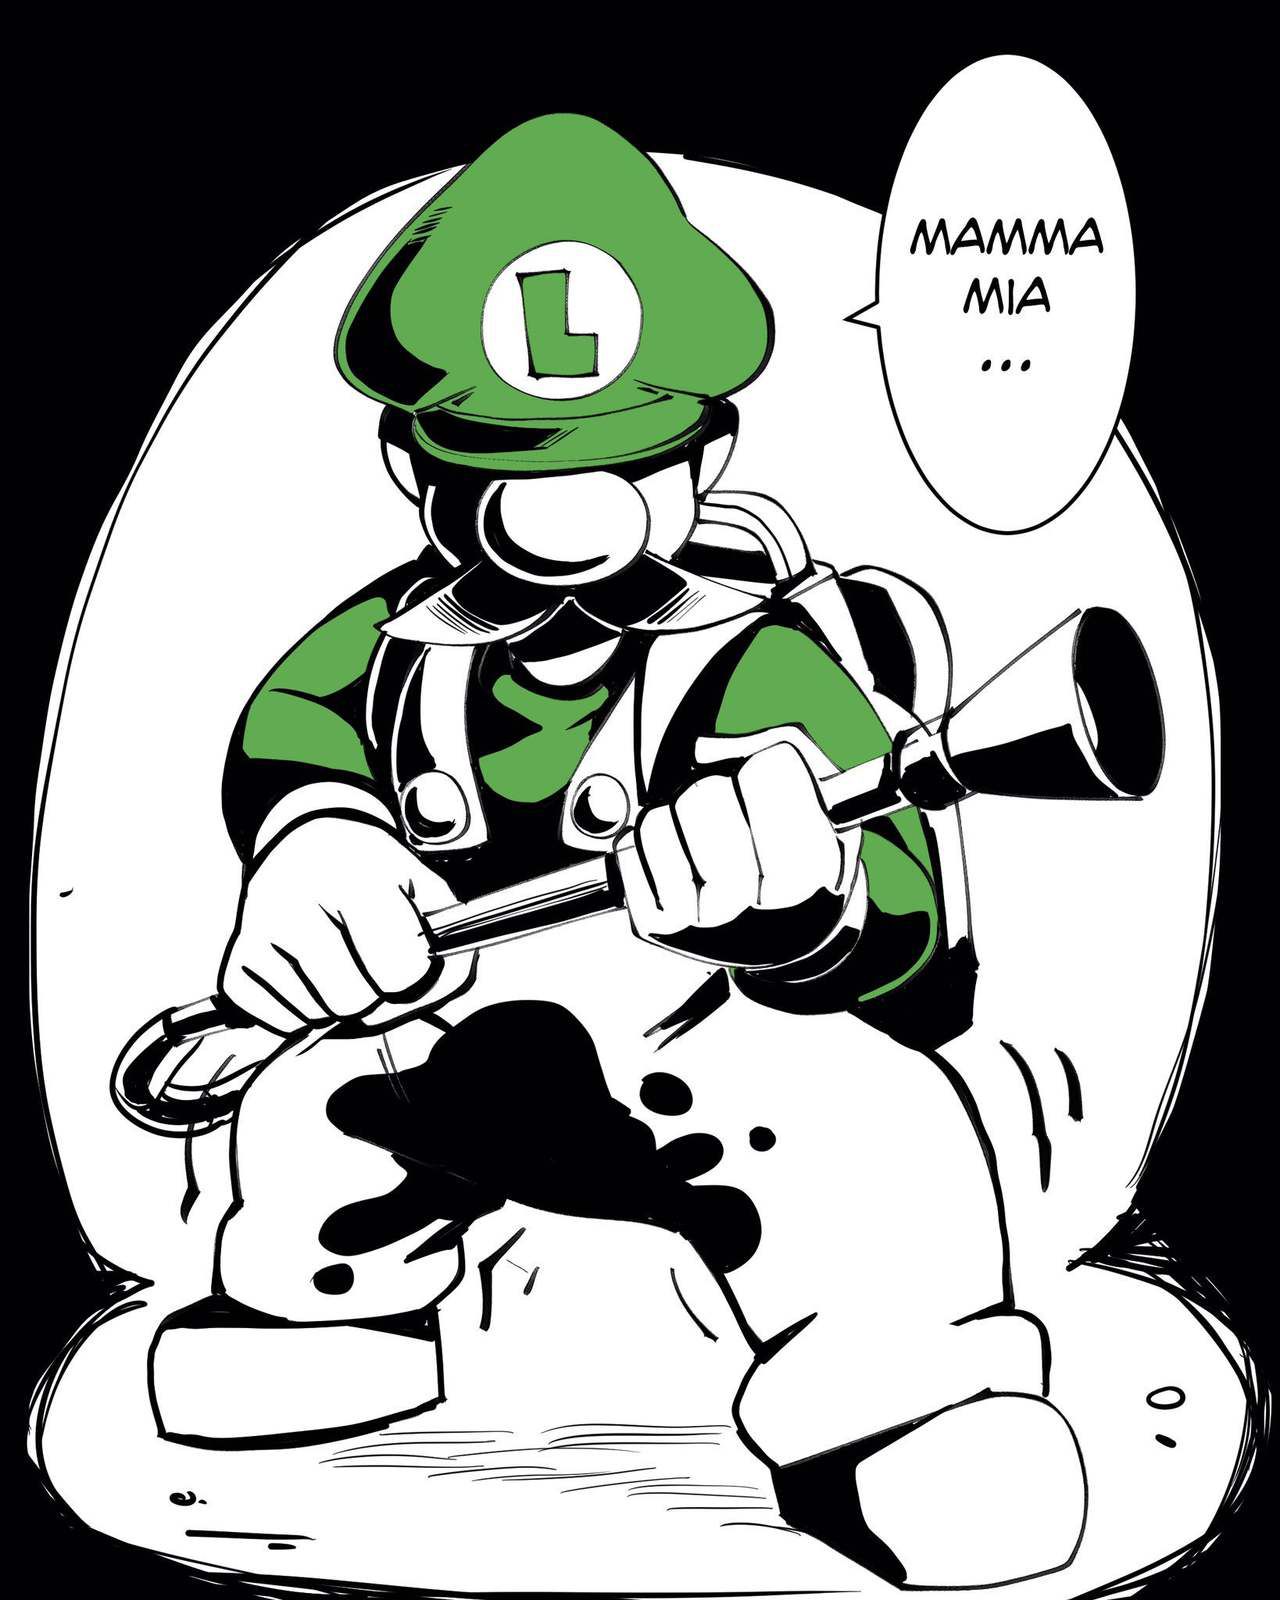 [Nisego] Inktober 2 - Luigi's Mansion (Super Mario Bros.) [Ongoing] 30